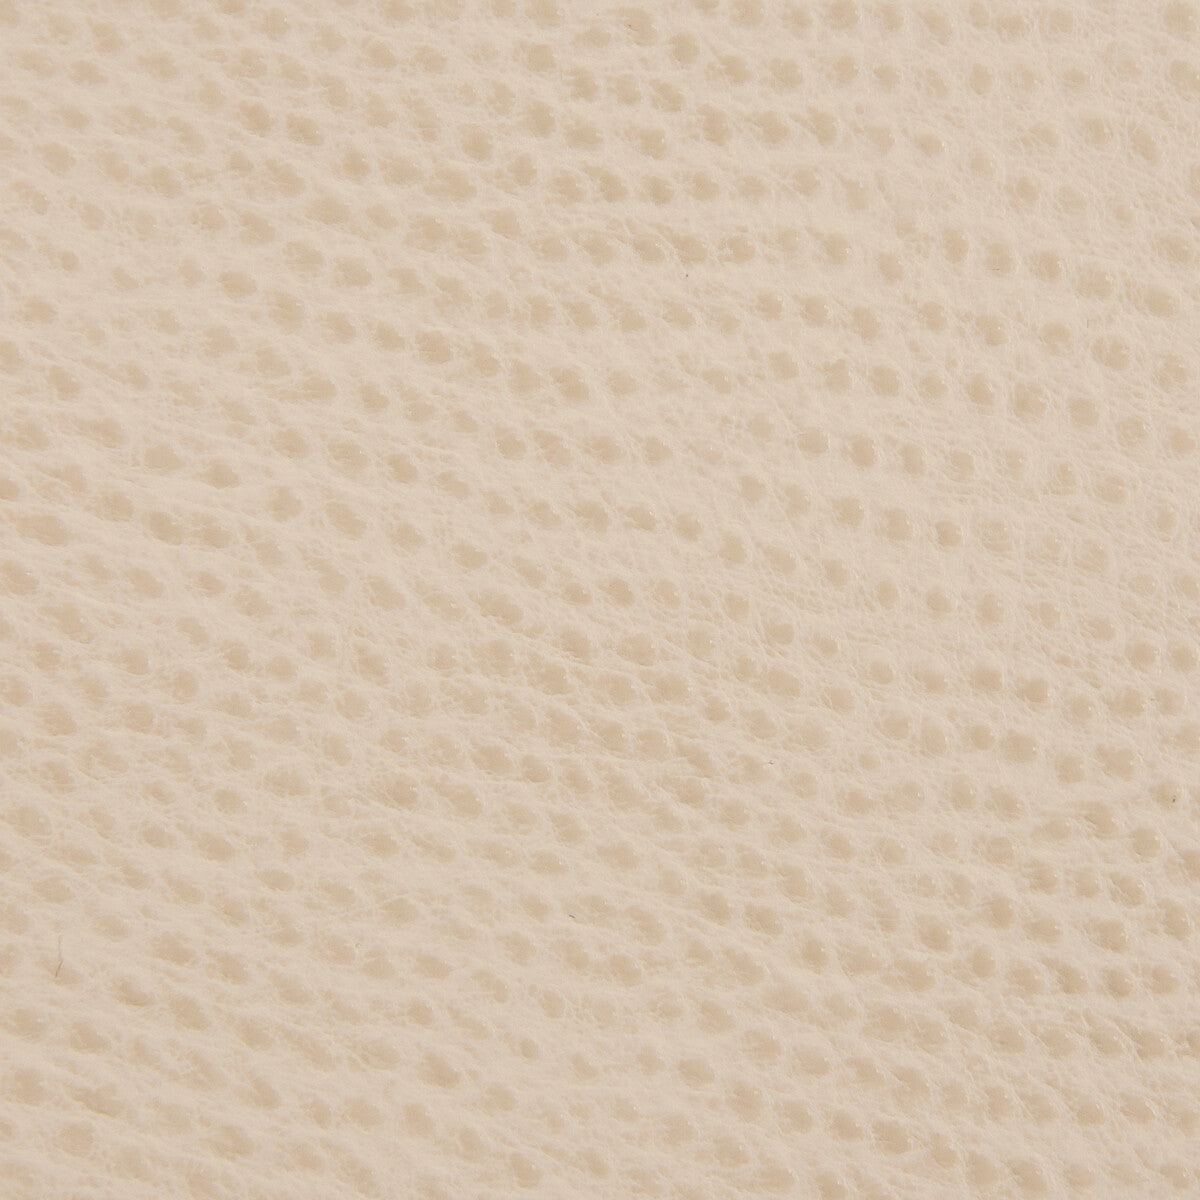 Kravet Contract fabric in belus-16 color - pattern BELUS.16.0 - by Kravet Contract